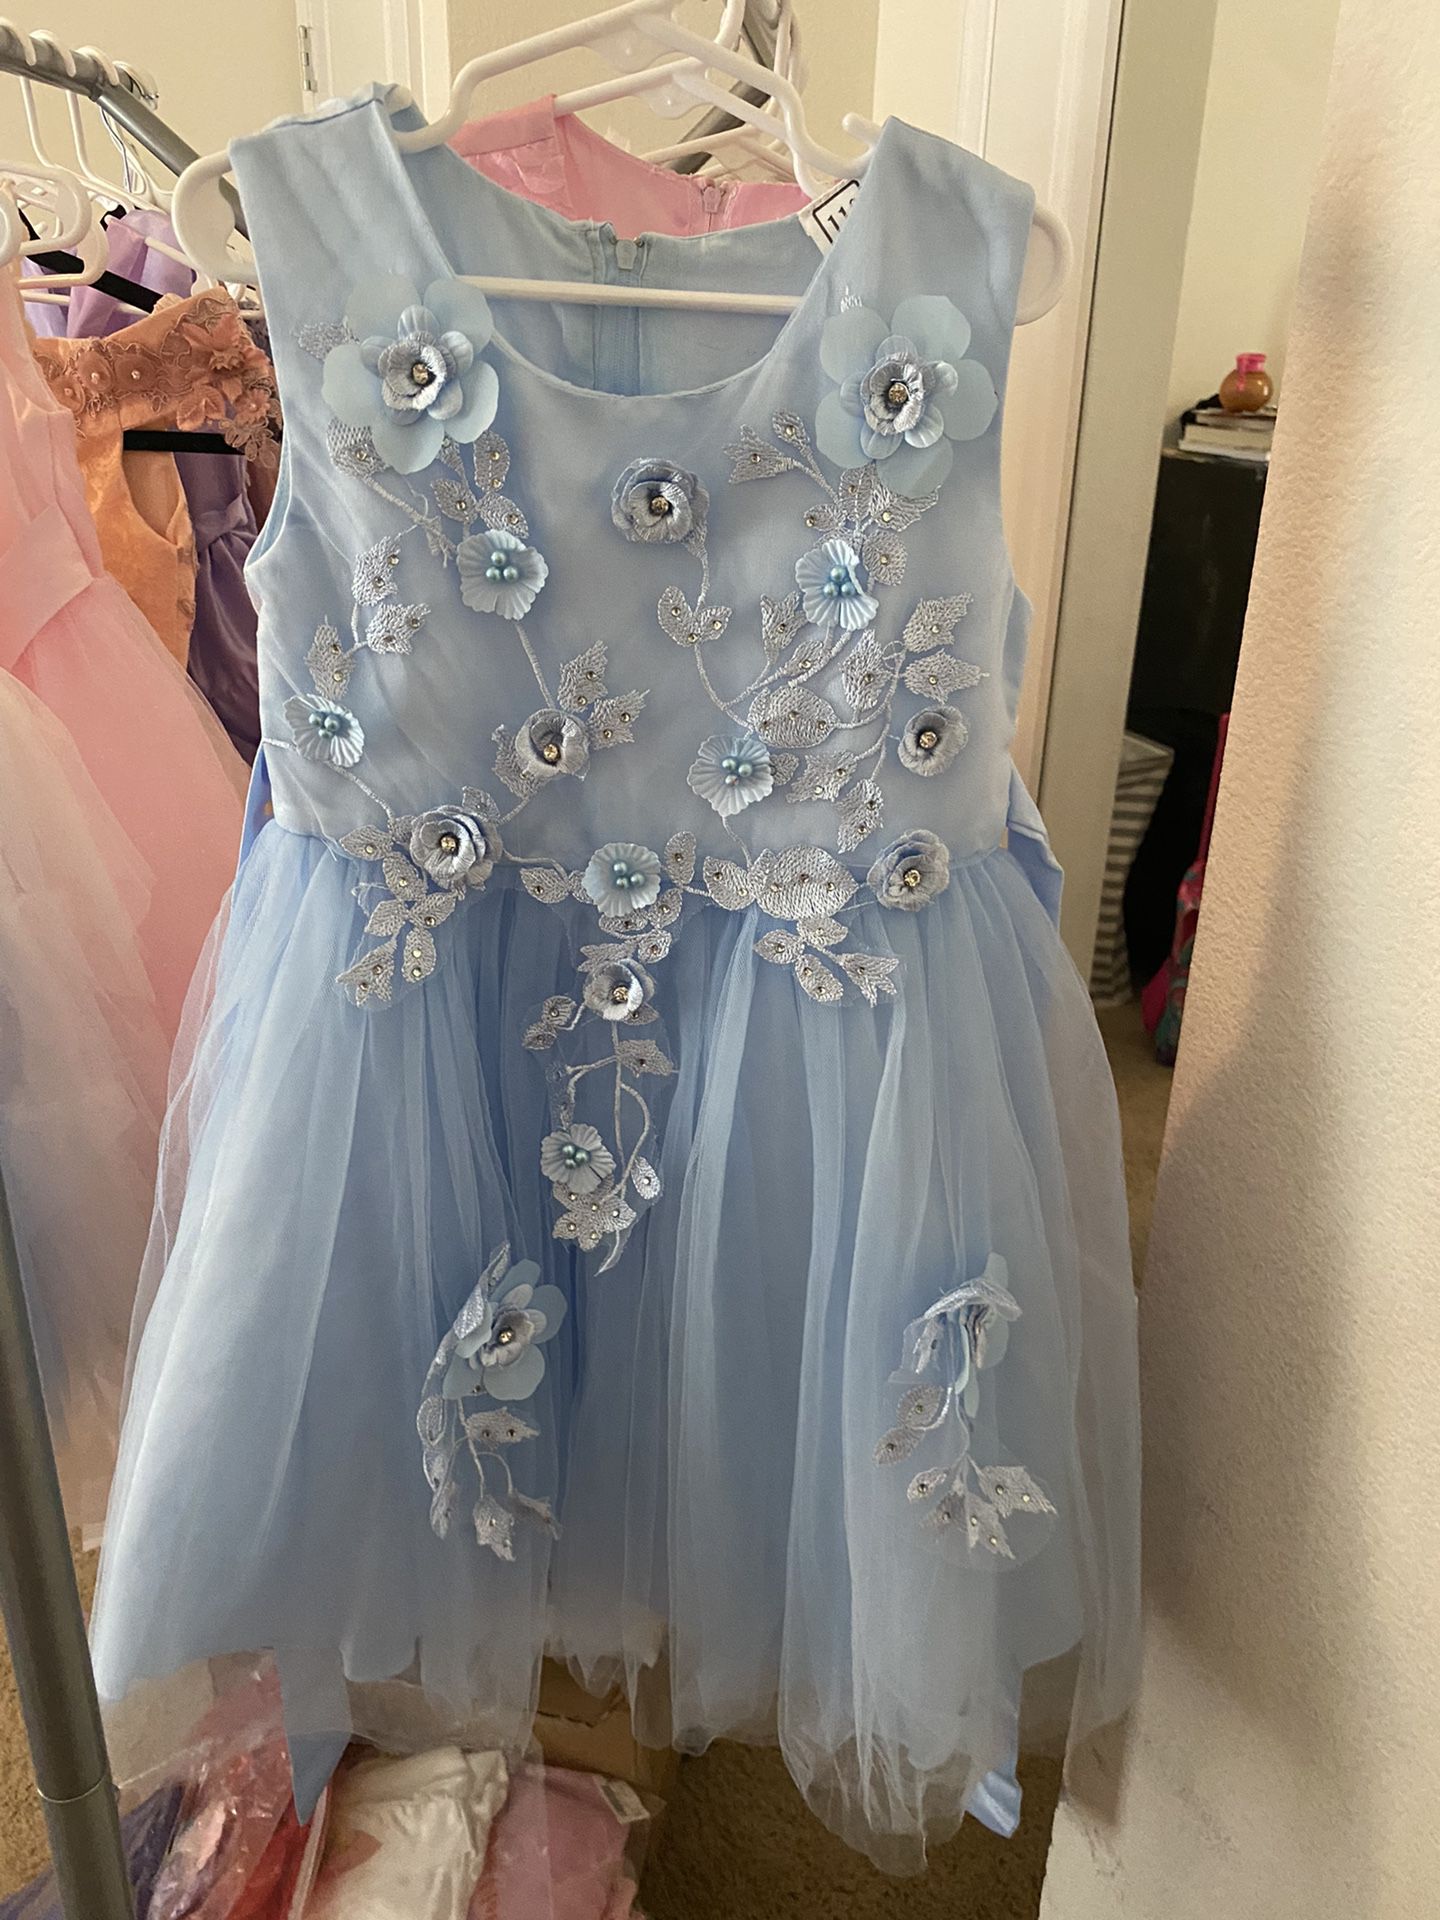 Brand New, Gorgeous Flower Dress, Color Blue, Size 3T 🌸